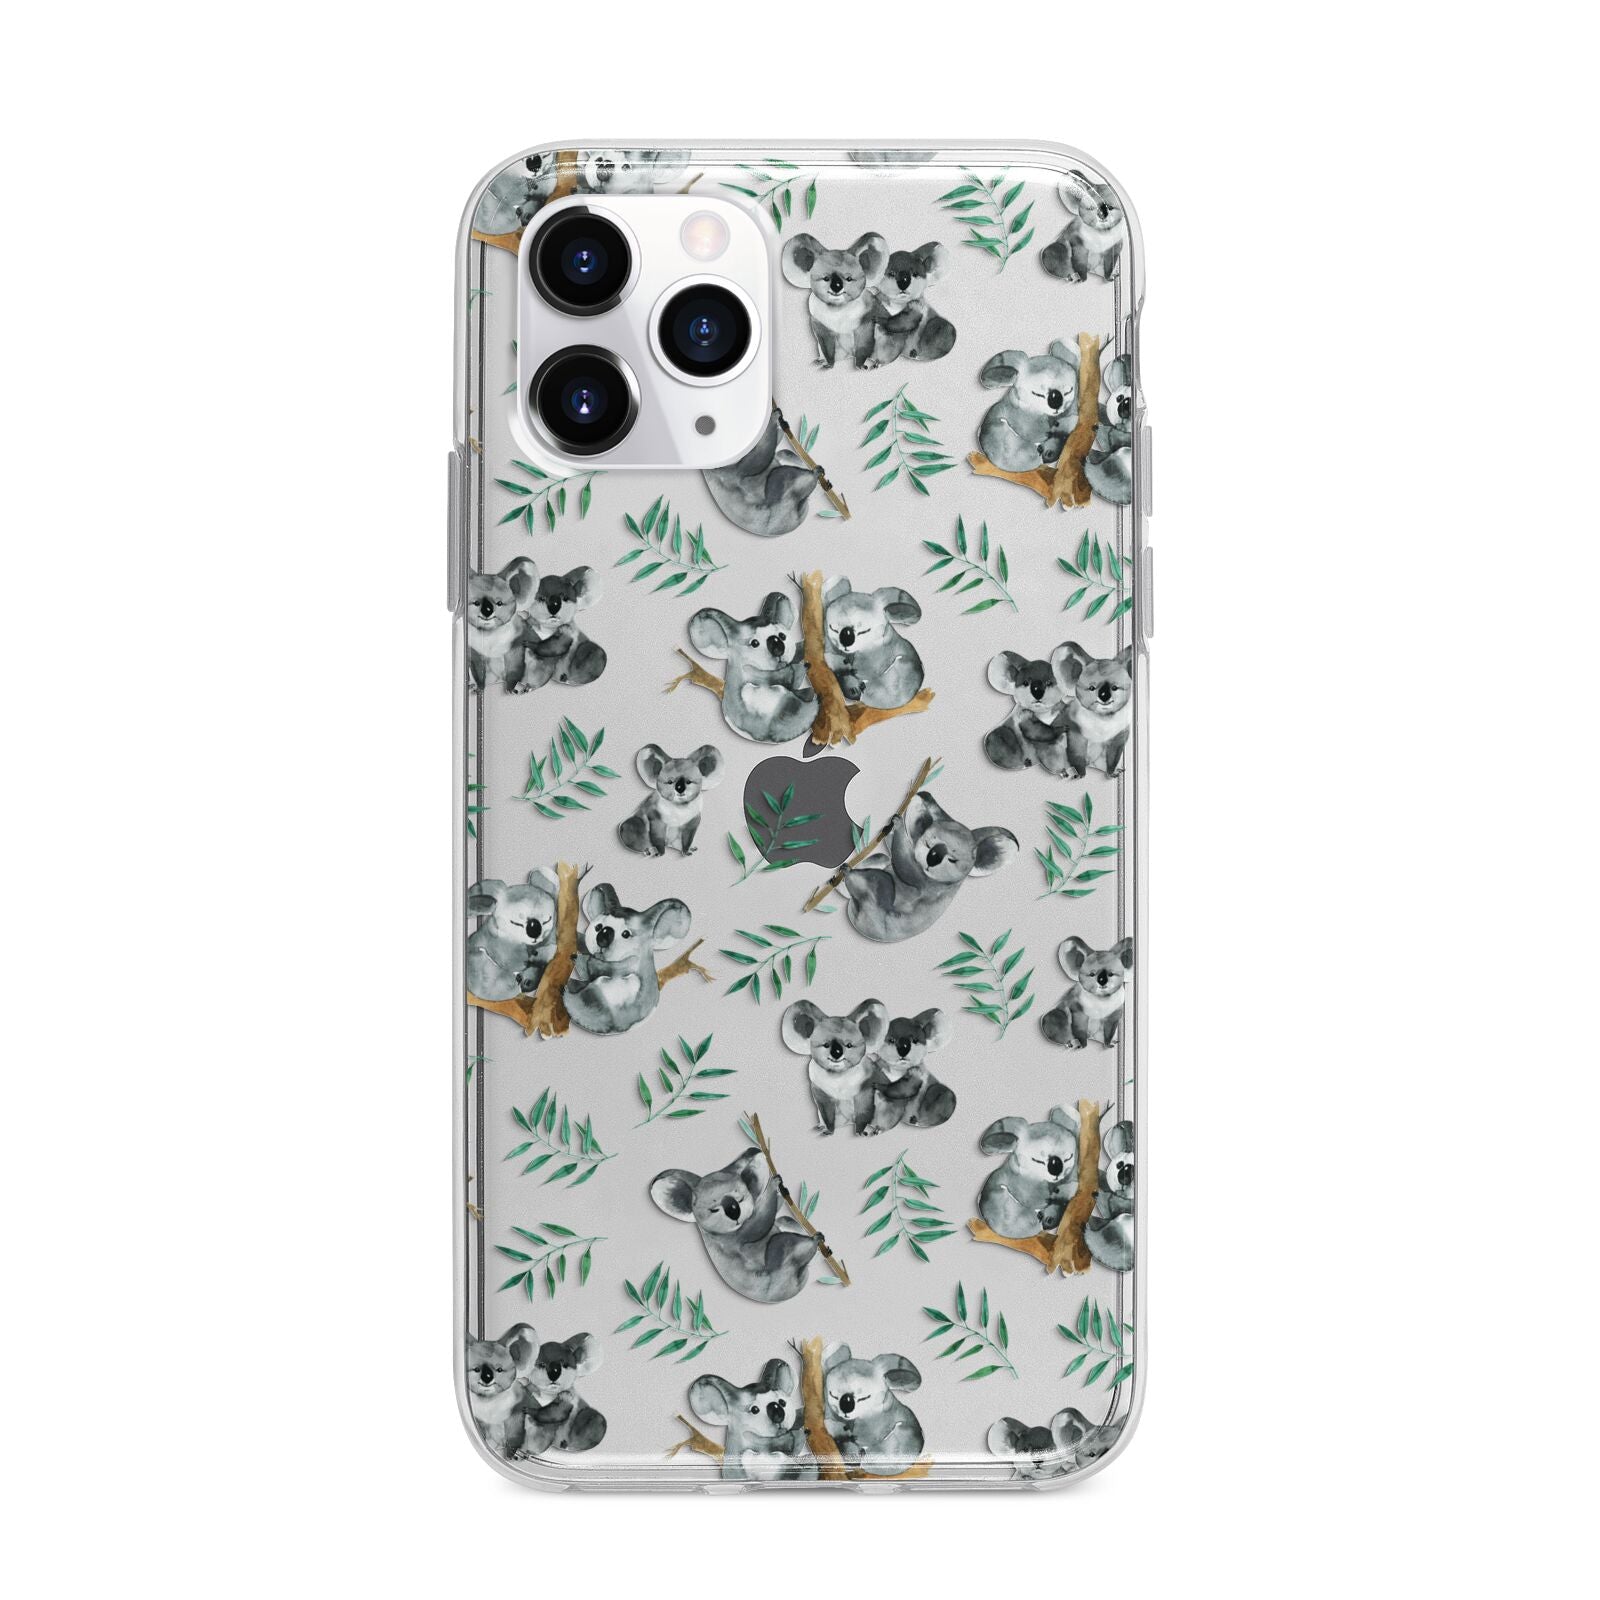 Koala Bear Apple iPhone 11 Pro Max in Silver with Bumper Case